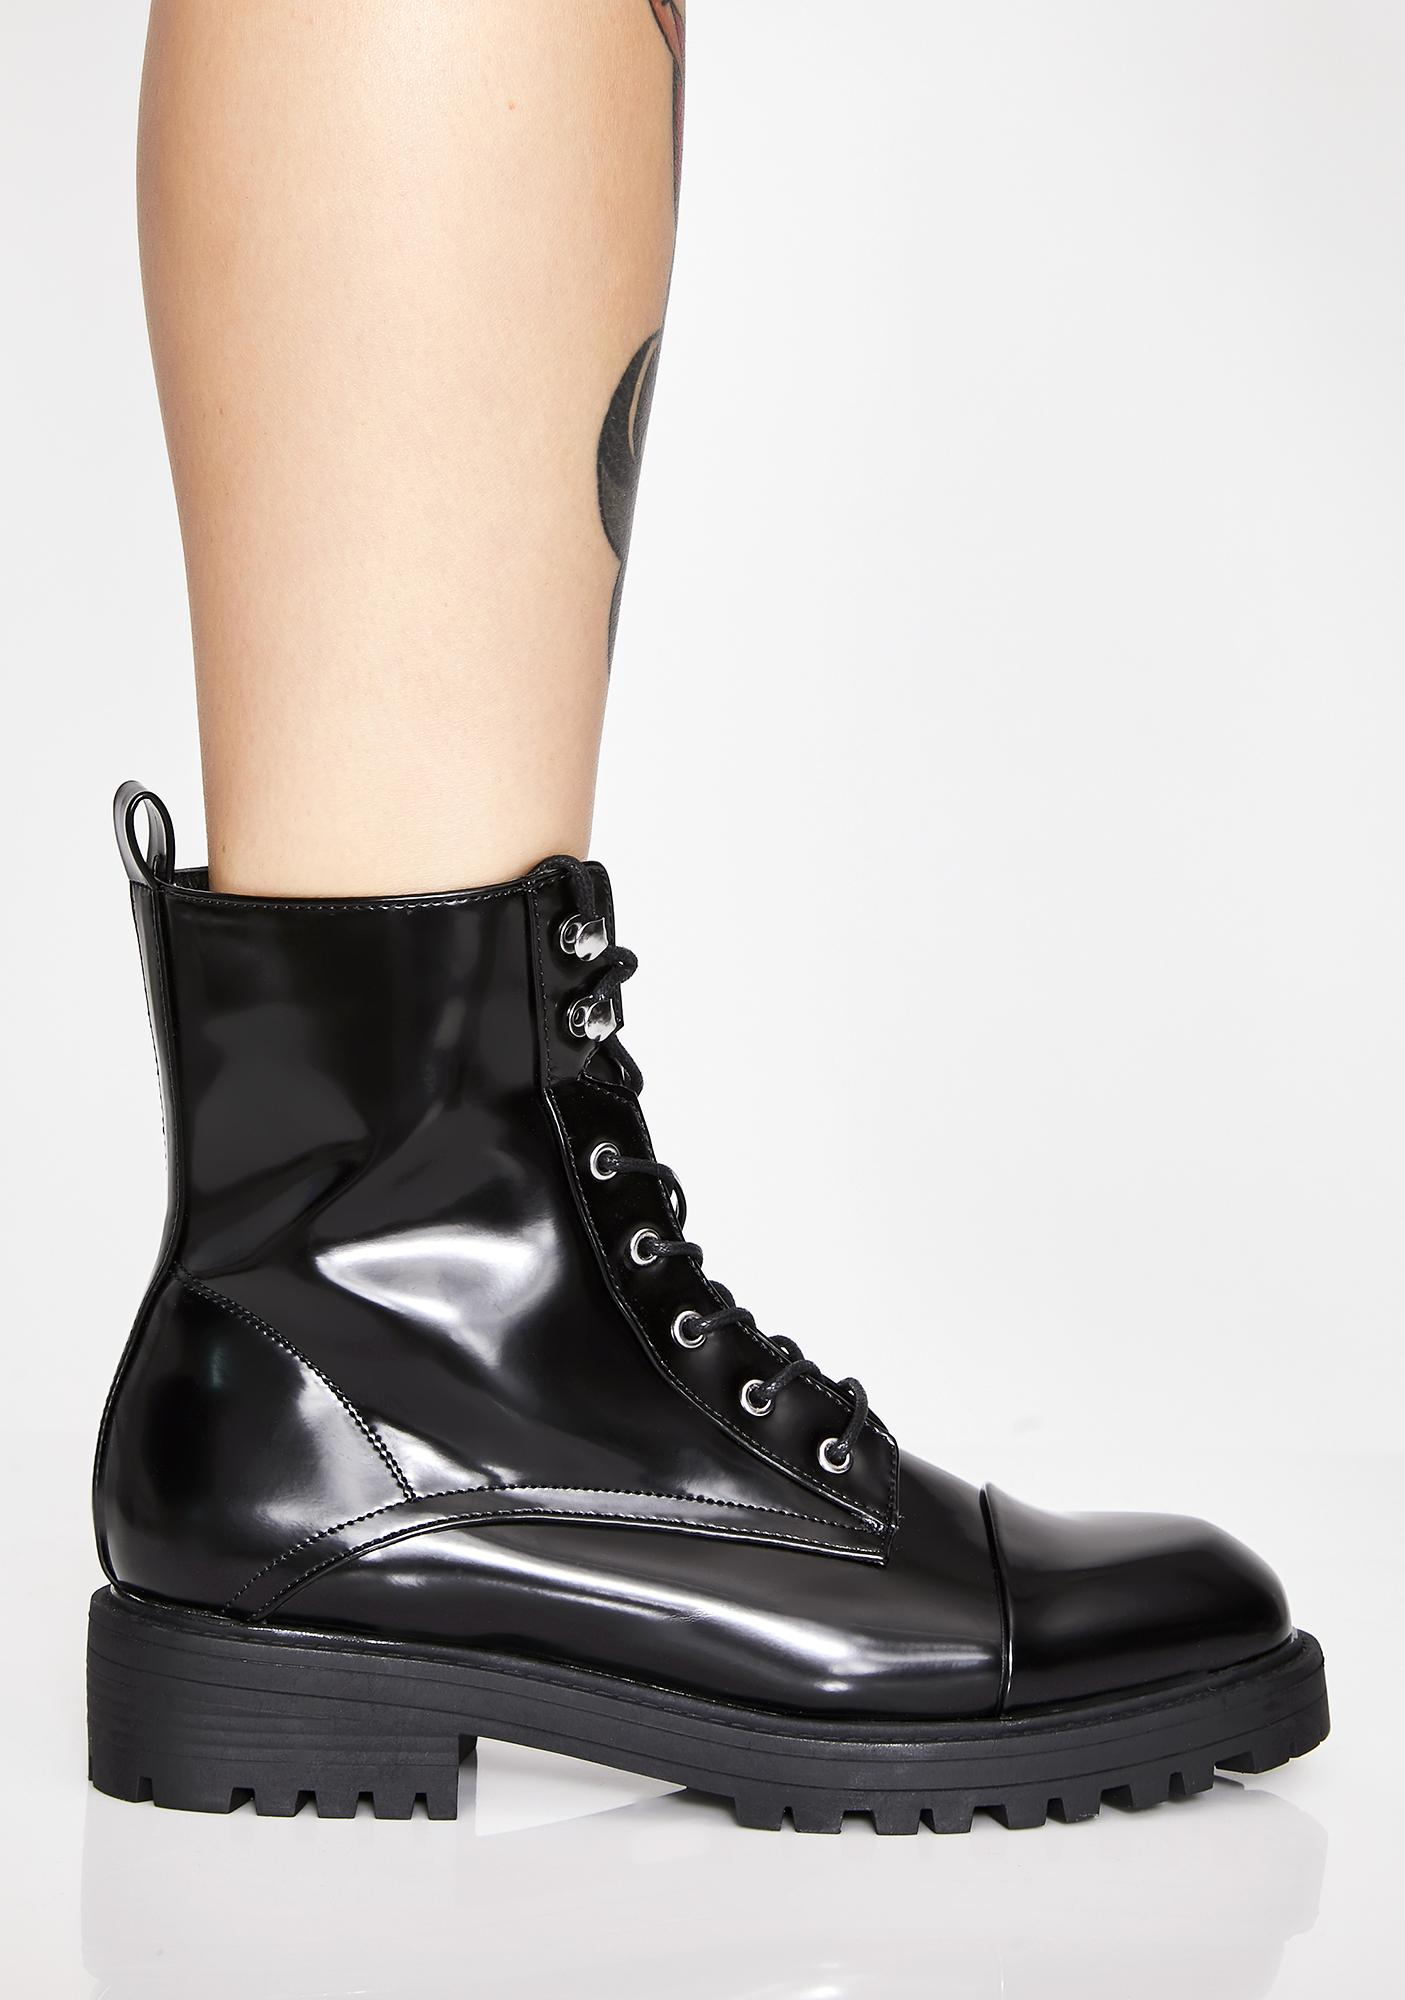 shiny black combat boots